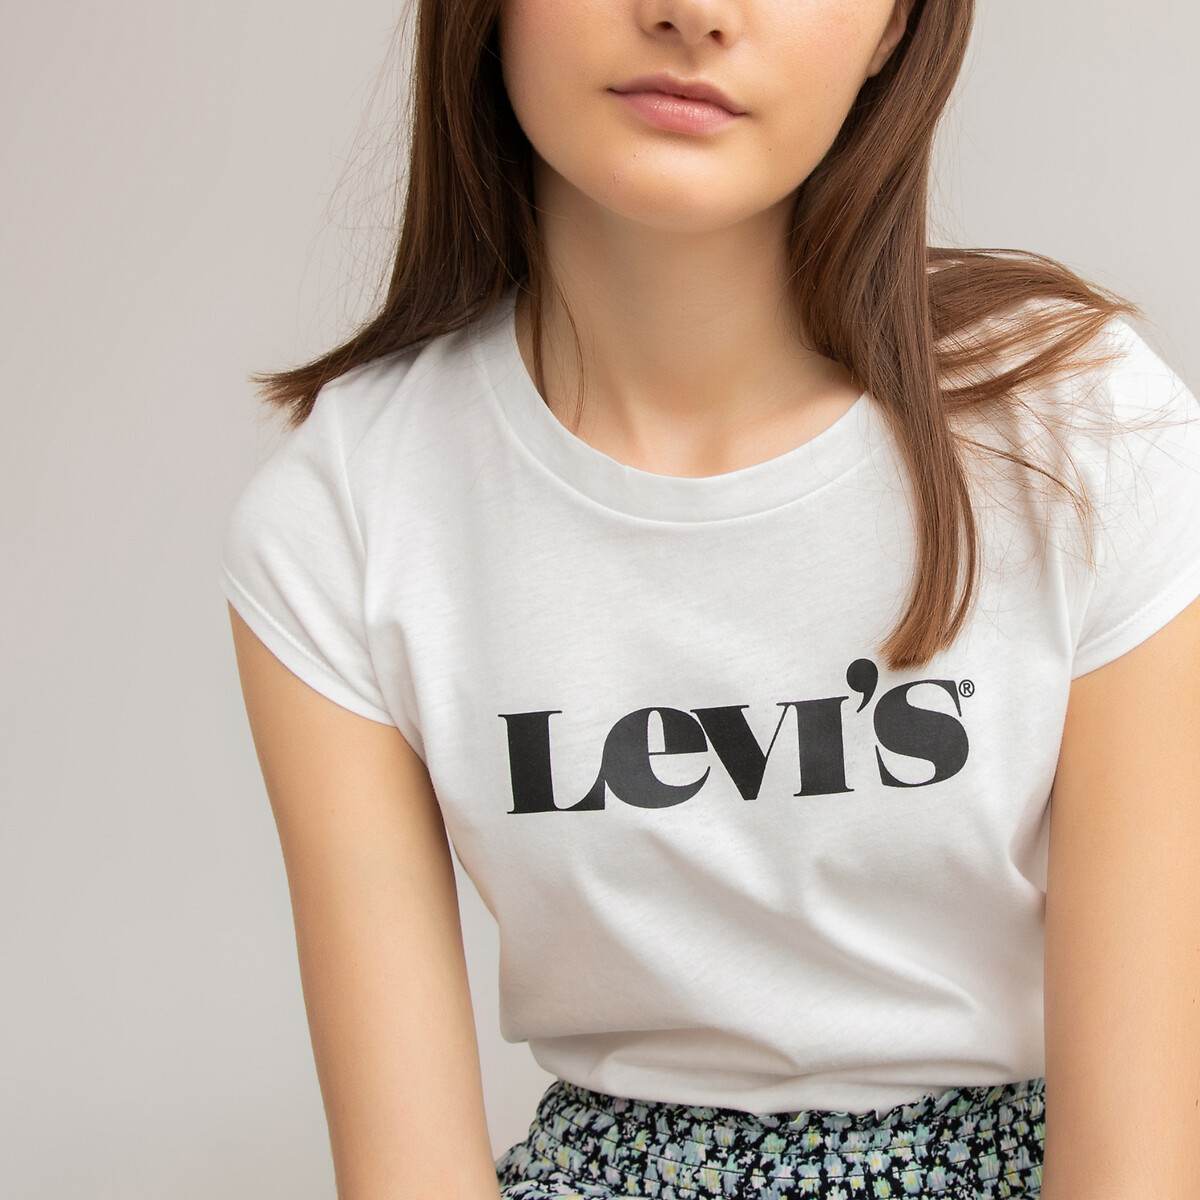 Levis Kids T-shirt de mangas curtas, 3-16 anos